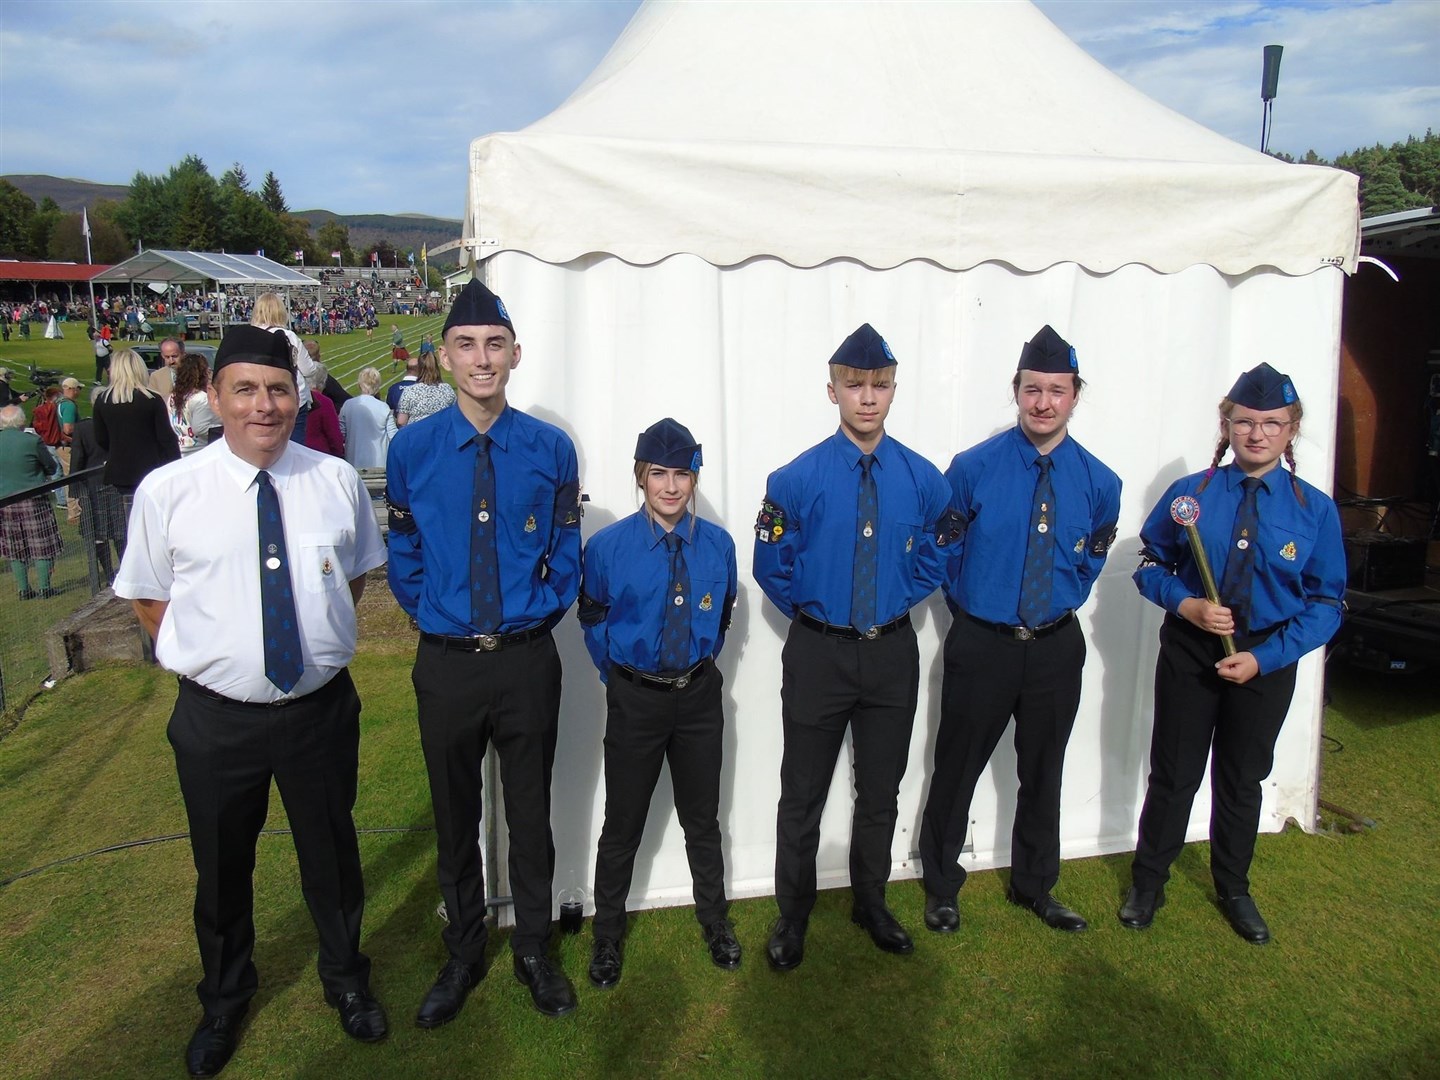 James Allan with Tayler Harper, Ryan Lawrence, Sebastian Tatka, Ruary McDonald and Kaelyn Simson. Picture: North Scottish Association Boys Brigade